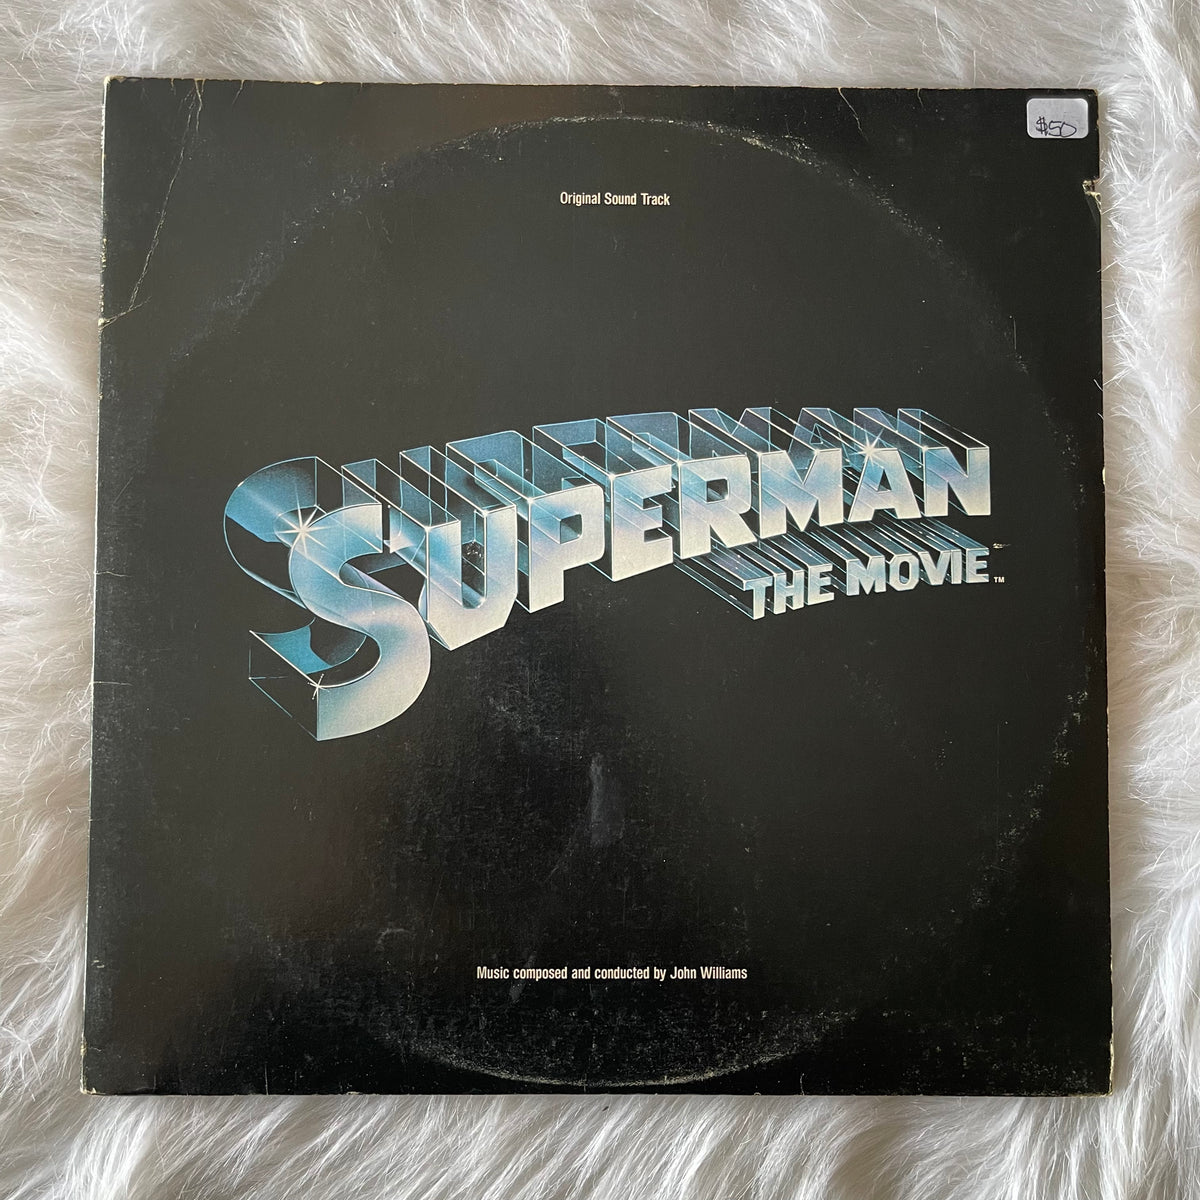 superman movie font